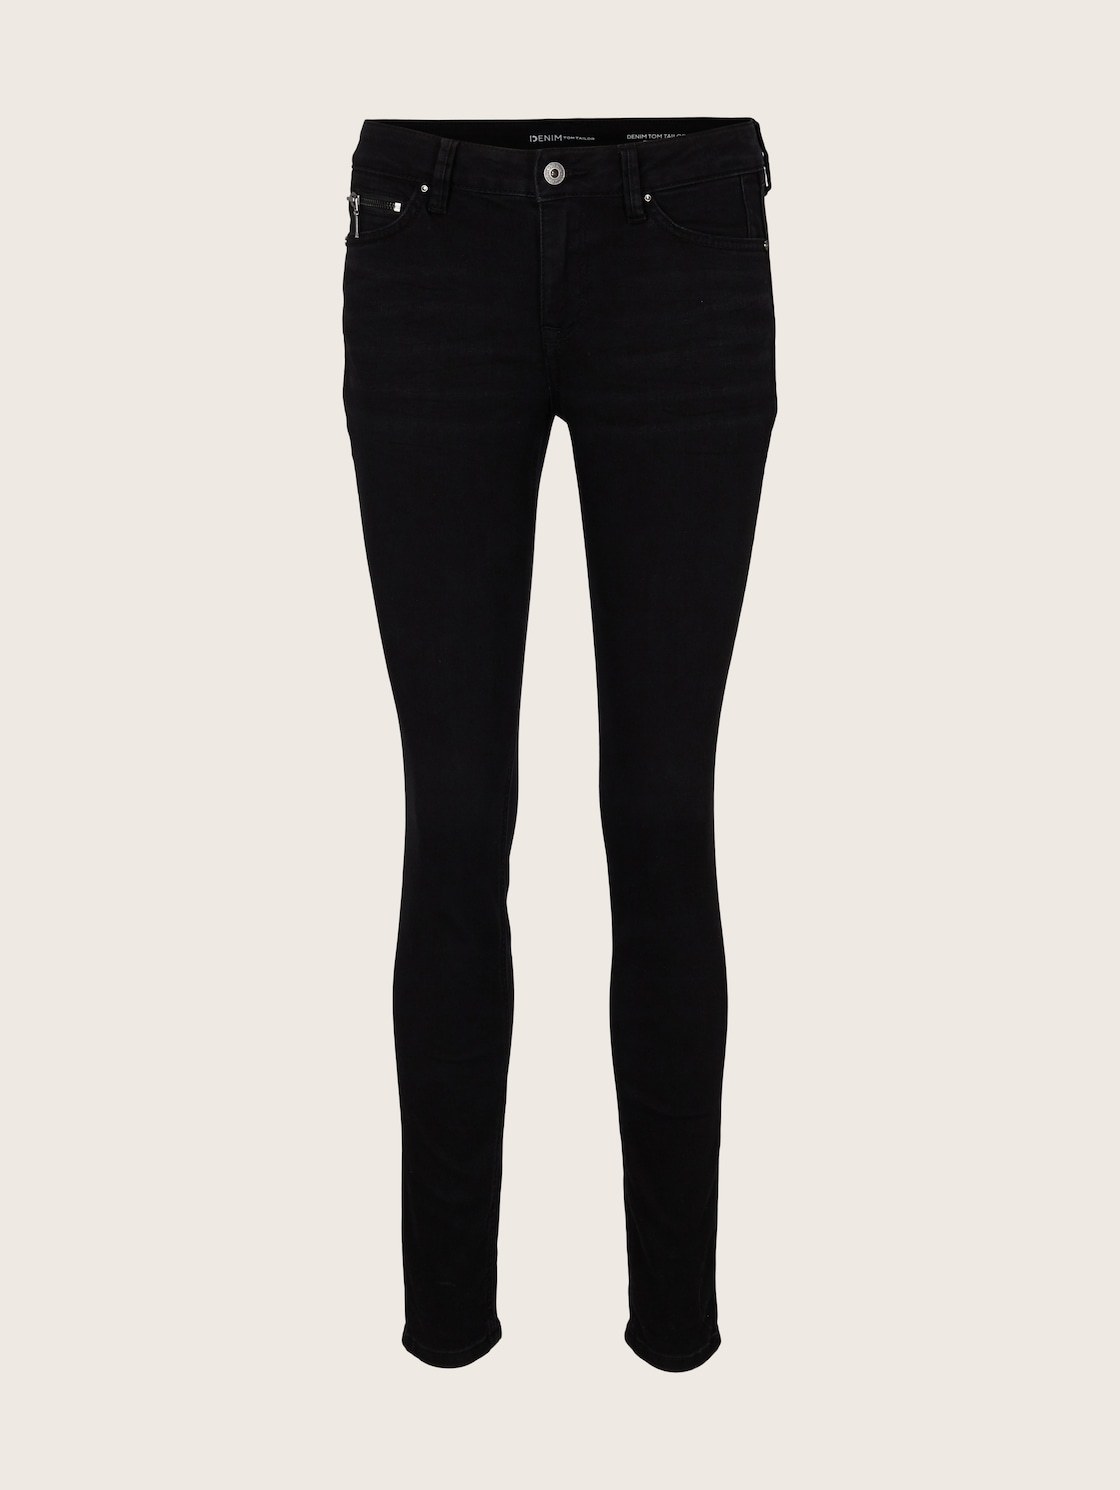 TOM TAILOR DENIM Damen Jona Extra Skinny Jeans mit recyceltem Polyester, schwarz, Uni, Gr. 32/30 von Tom Tailor Denim